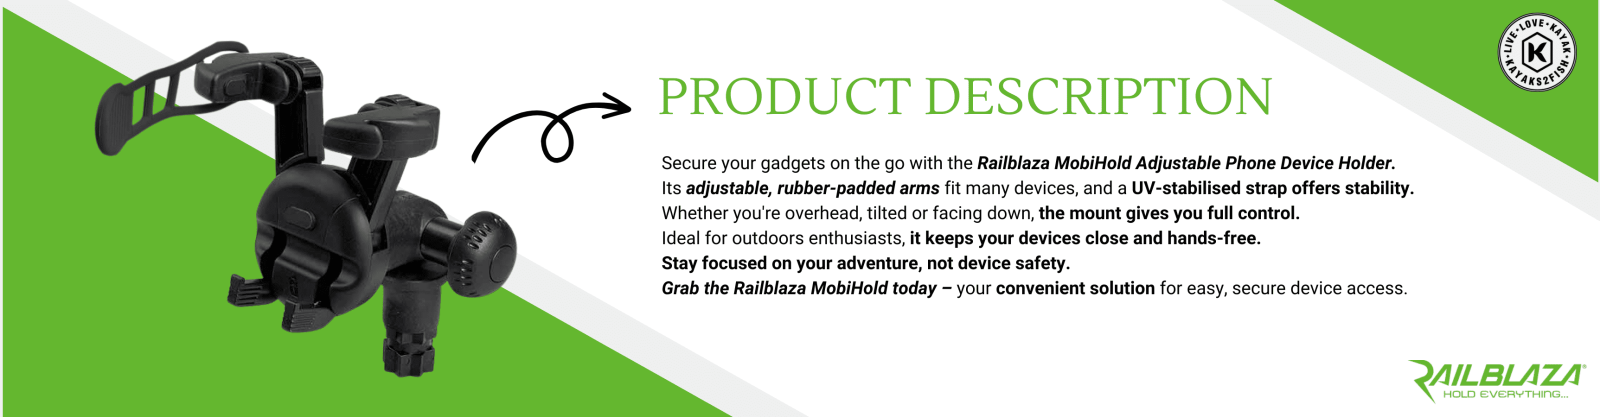 Railblaza MobiHold Adjustable Phone Device Holder